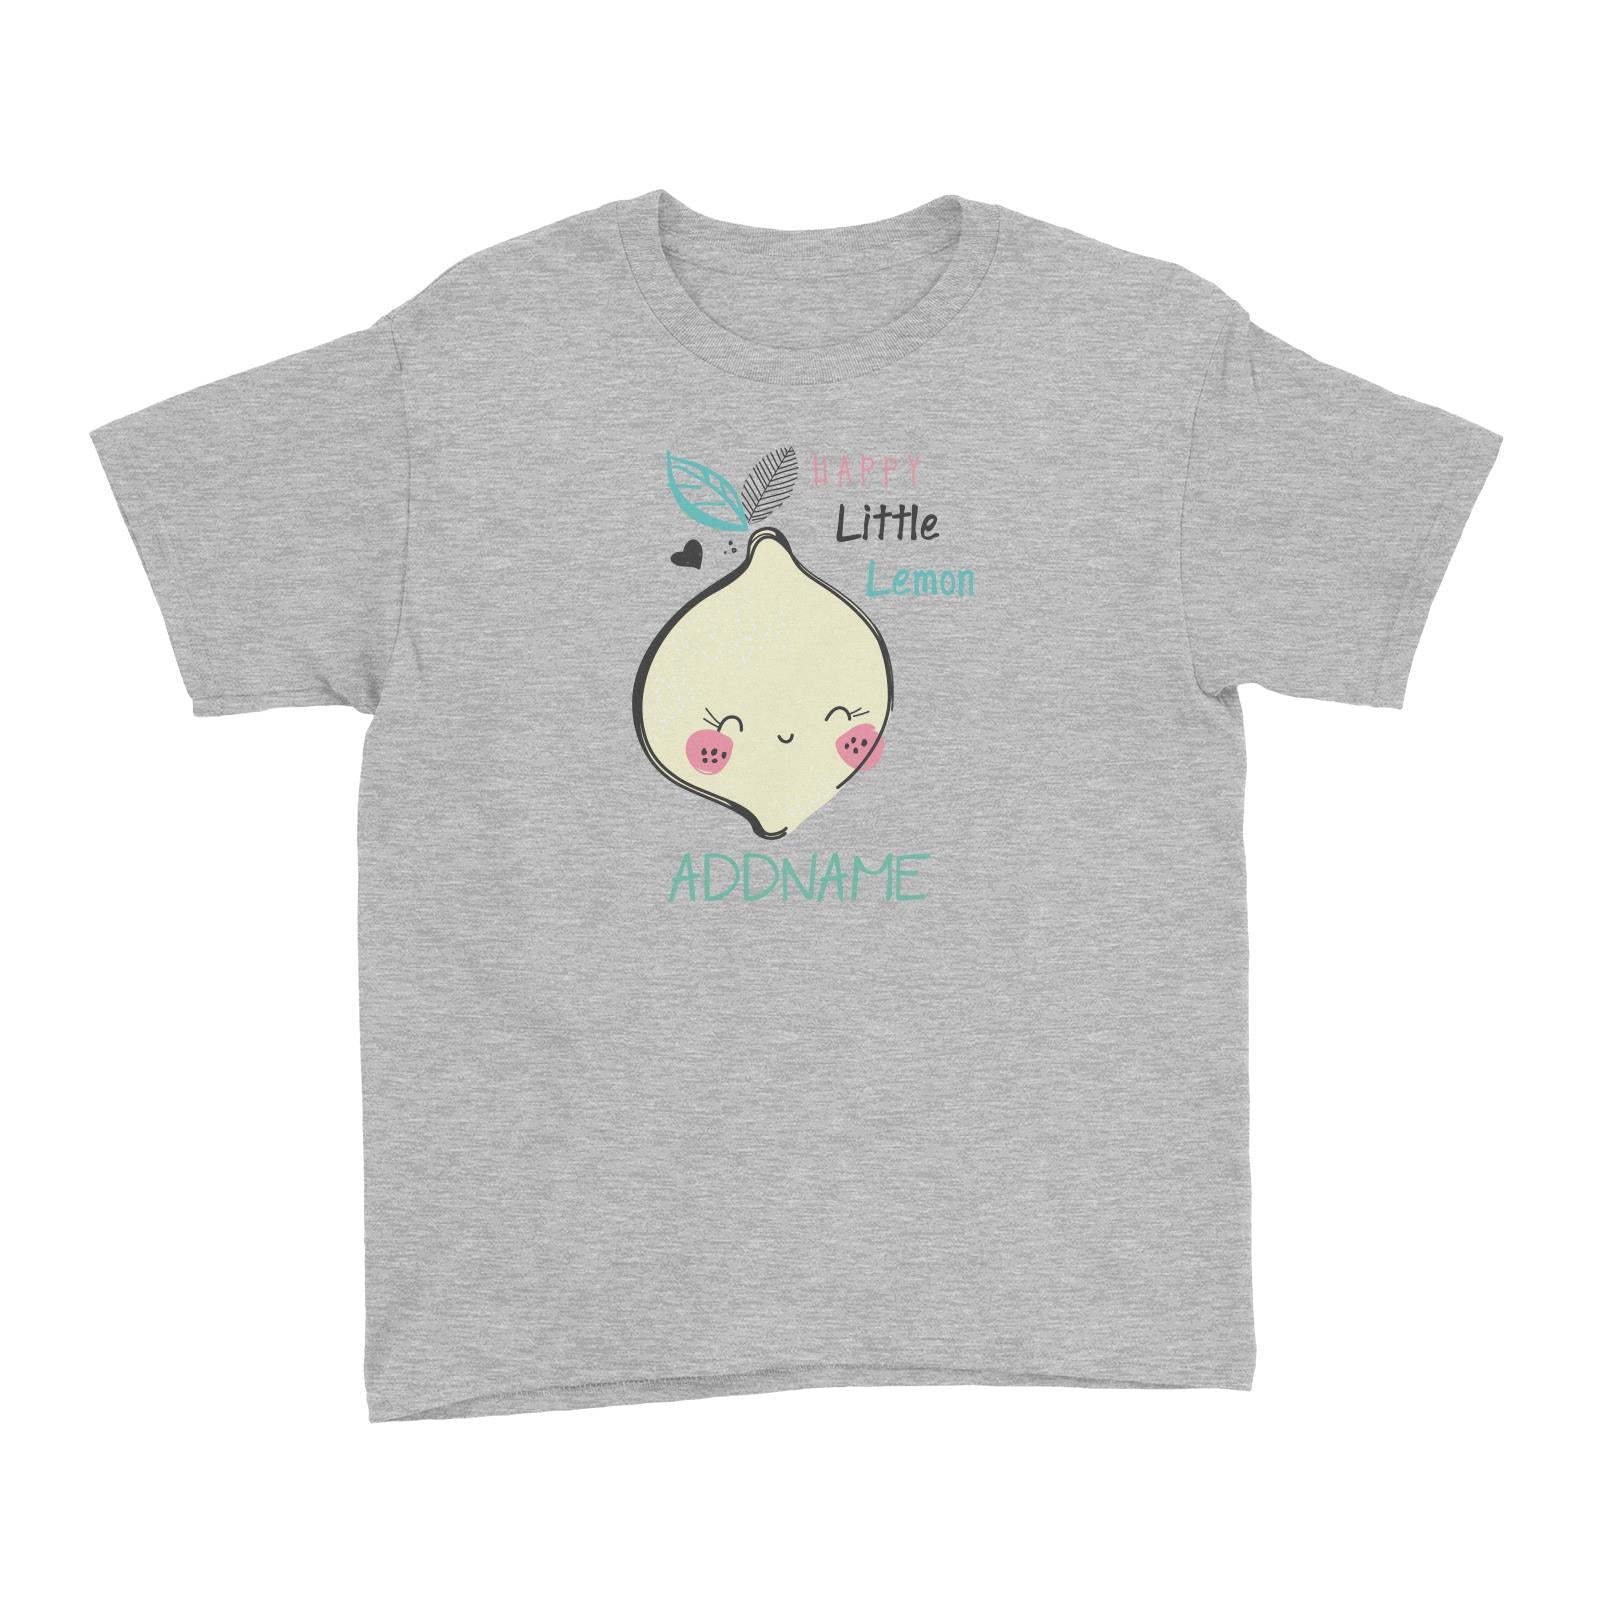 Cool Vibrant Series Happy Little Lemon Addname Kid's T-Shirt